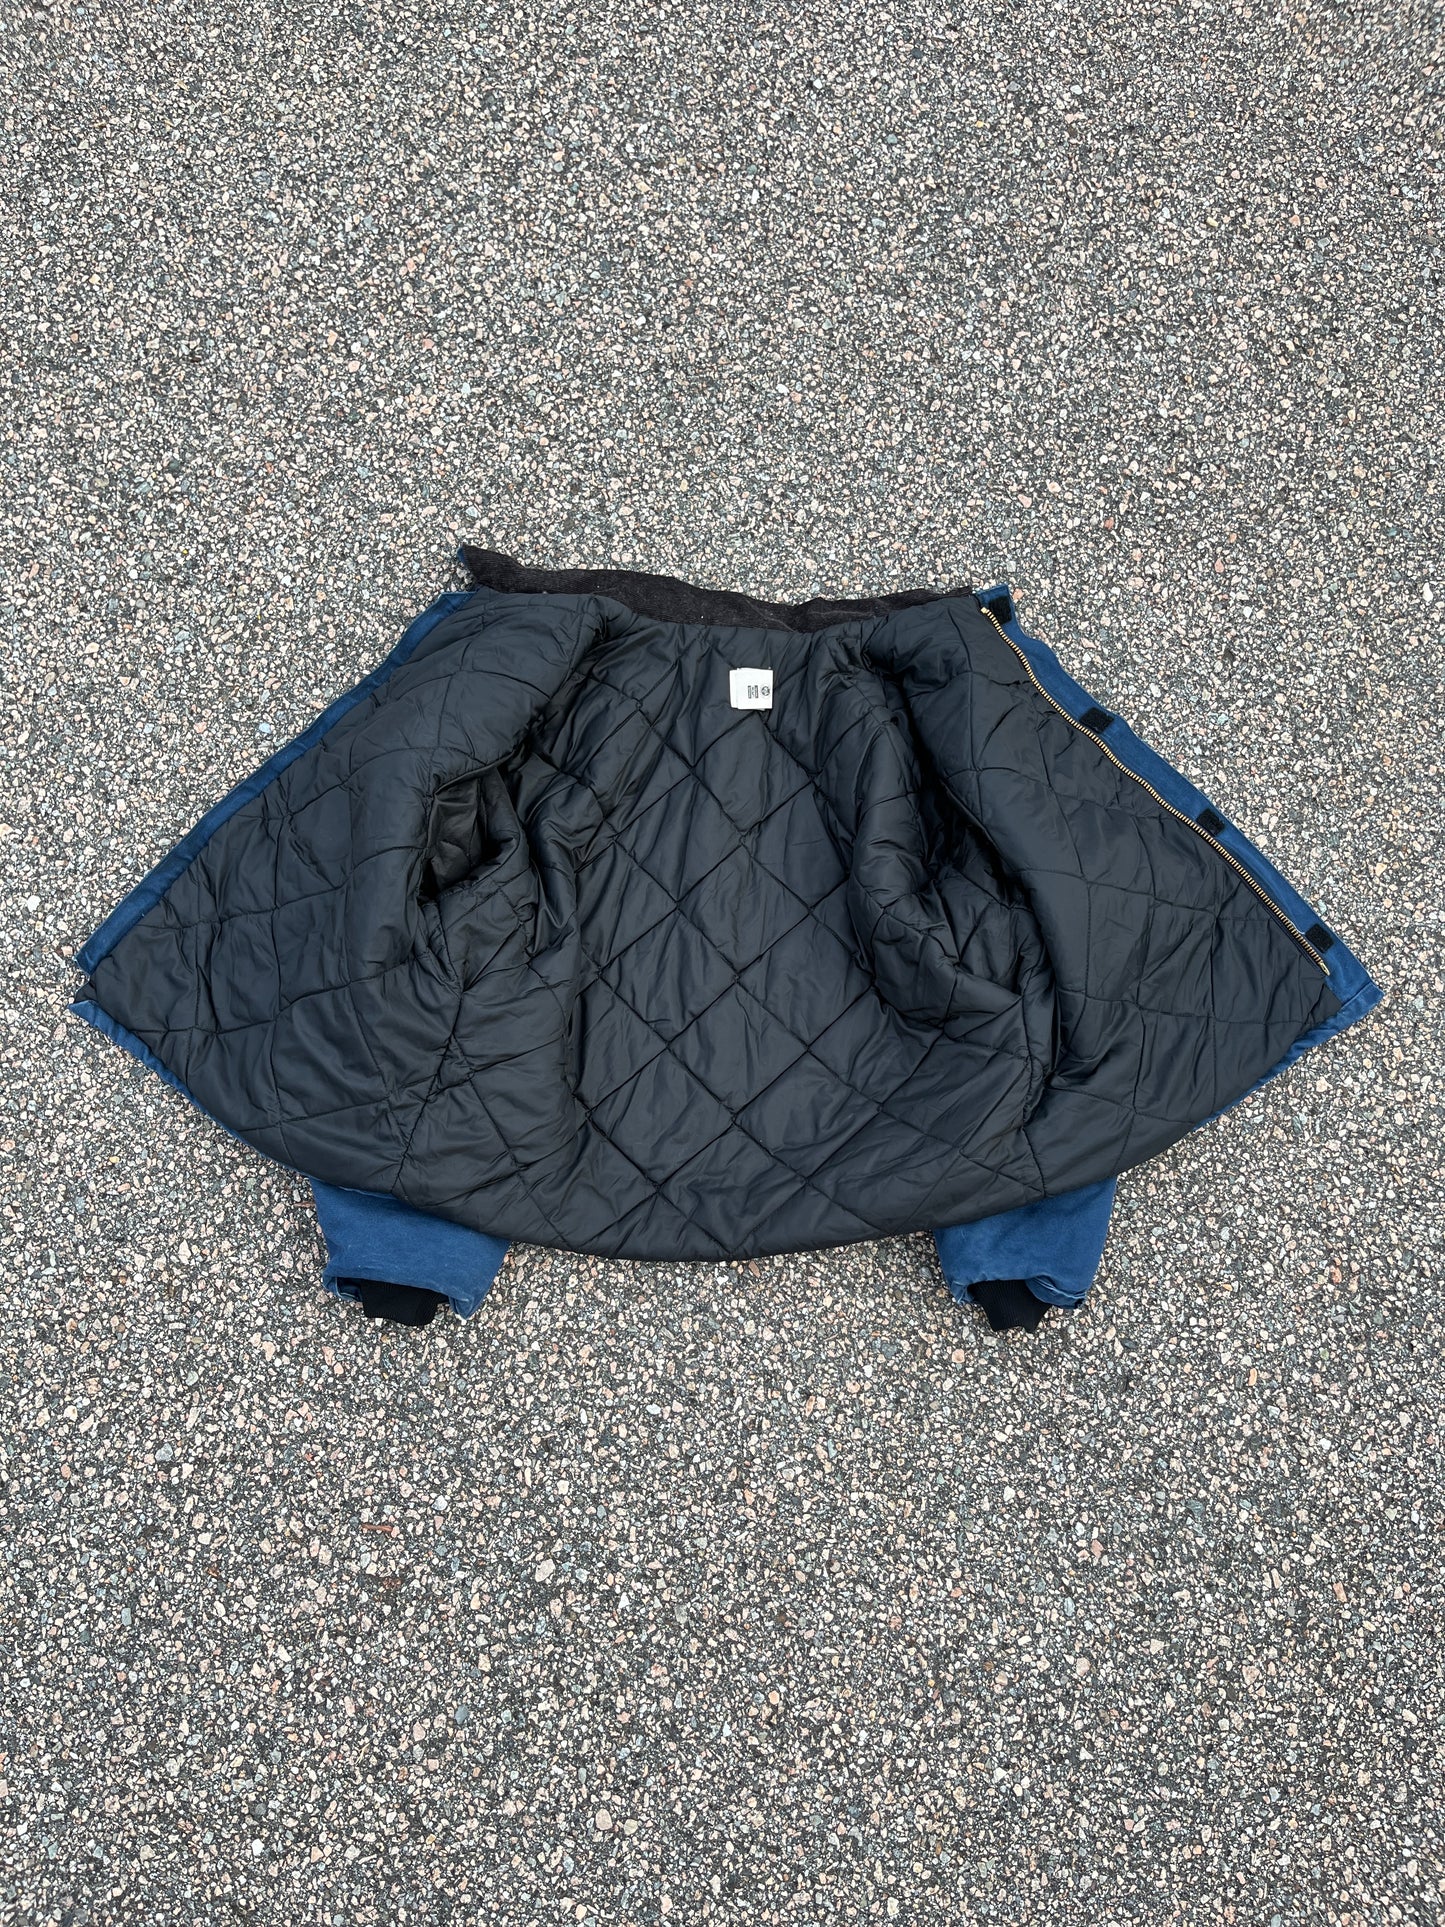 Faded Blue Carhartt Arctic Jacket - Boxy Cropped XL